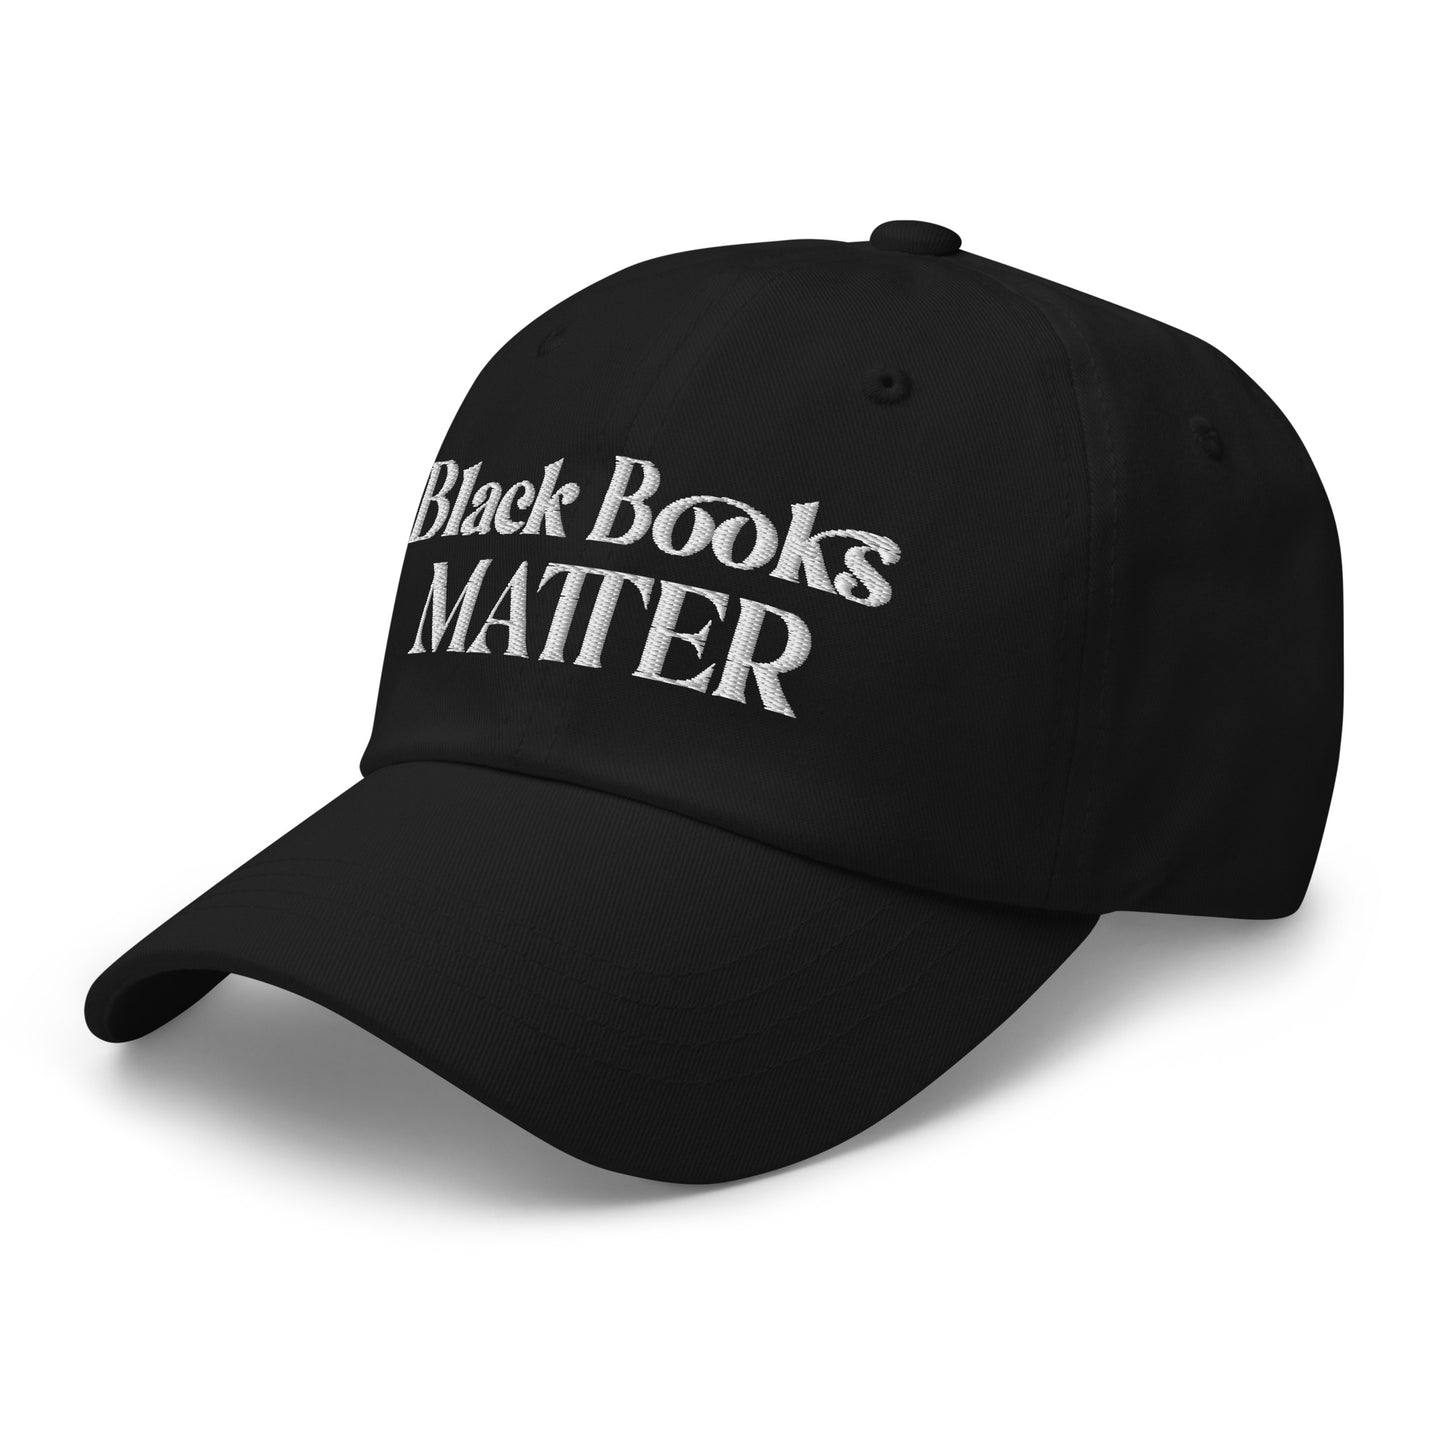 Black Books Matter hat